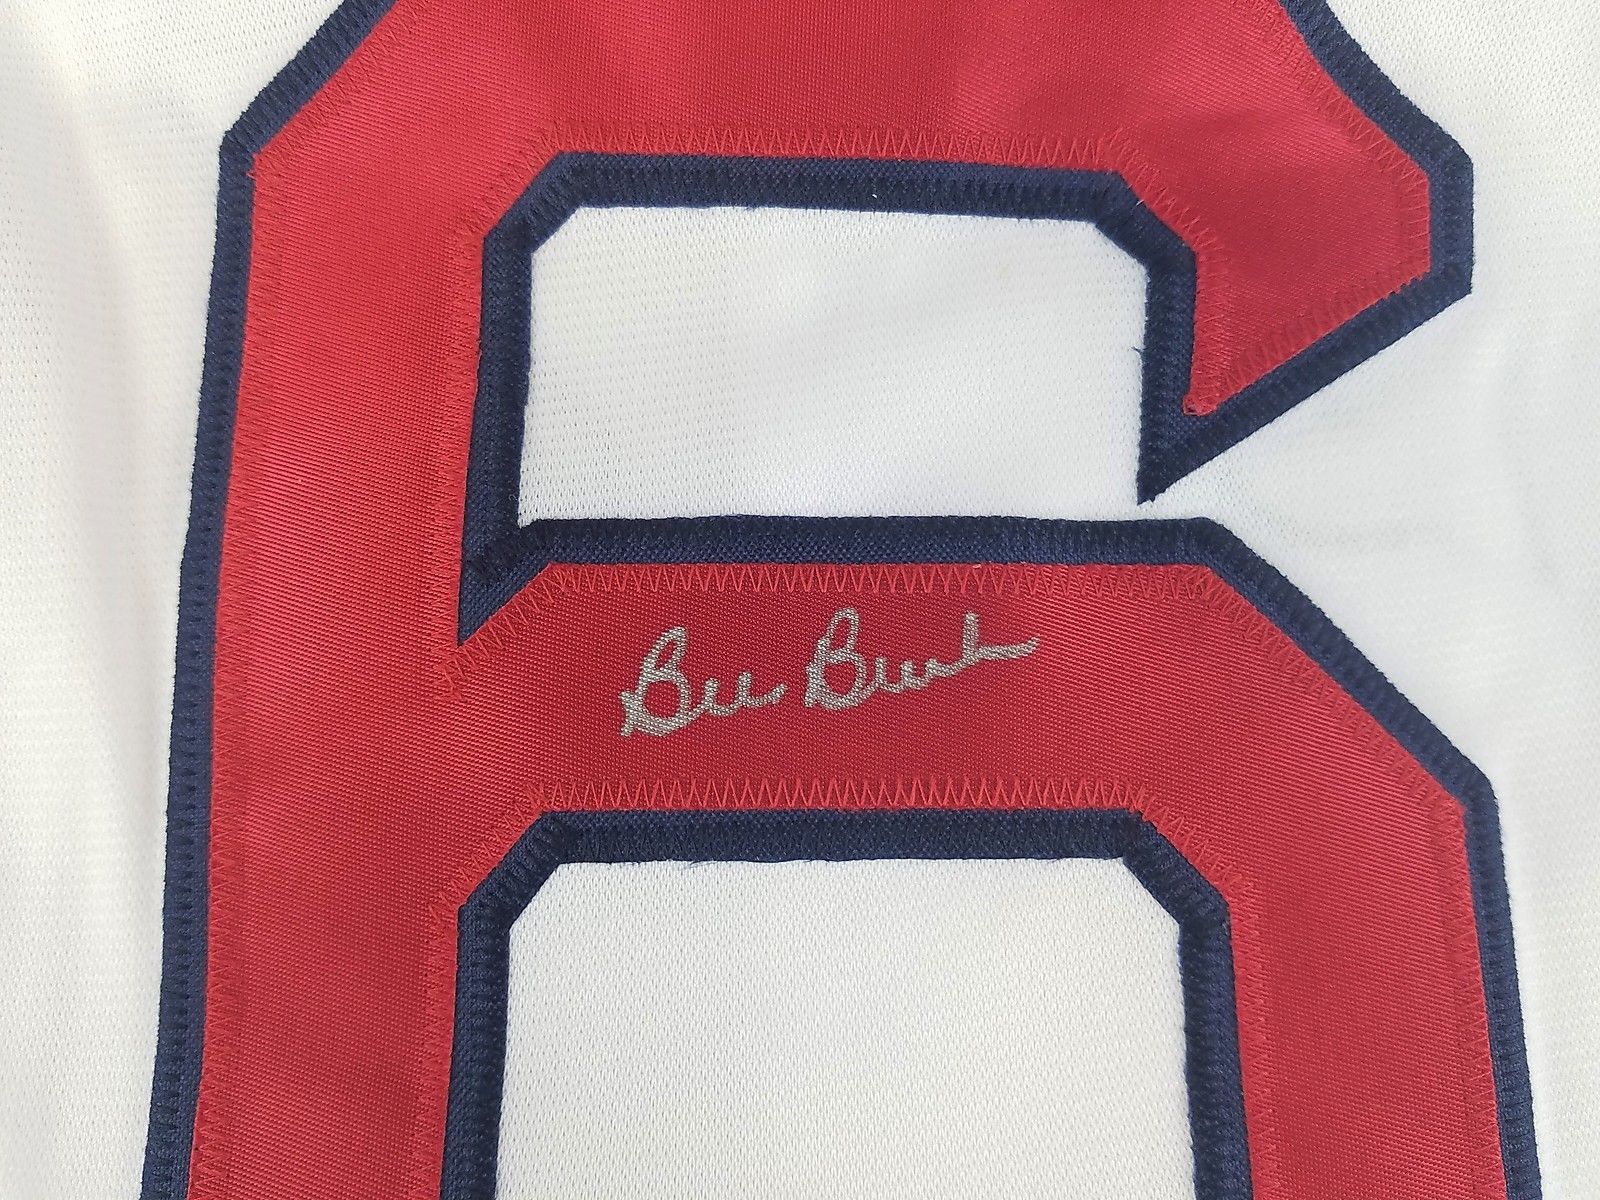 Bill Buckner Signed Autographed Boston Red Sox Baseball Jersey